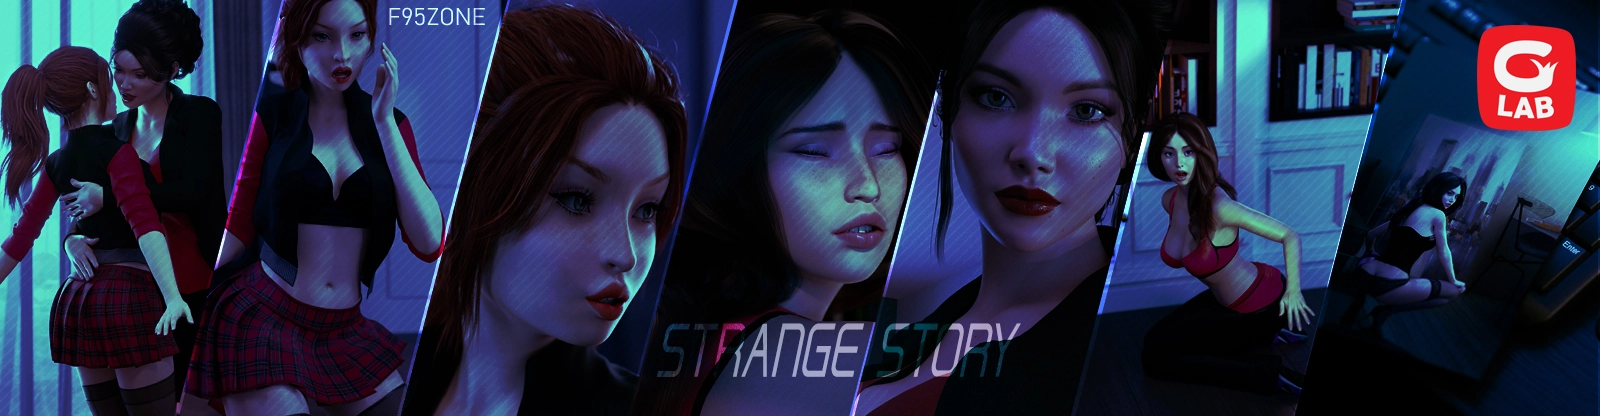 A Strange Story [v0.5.1] main image